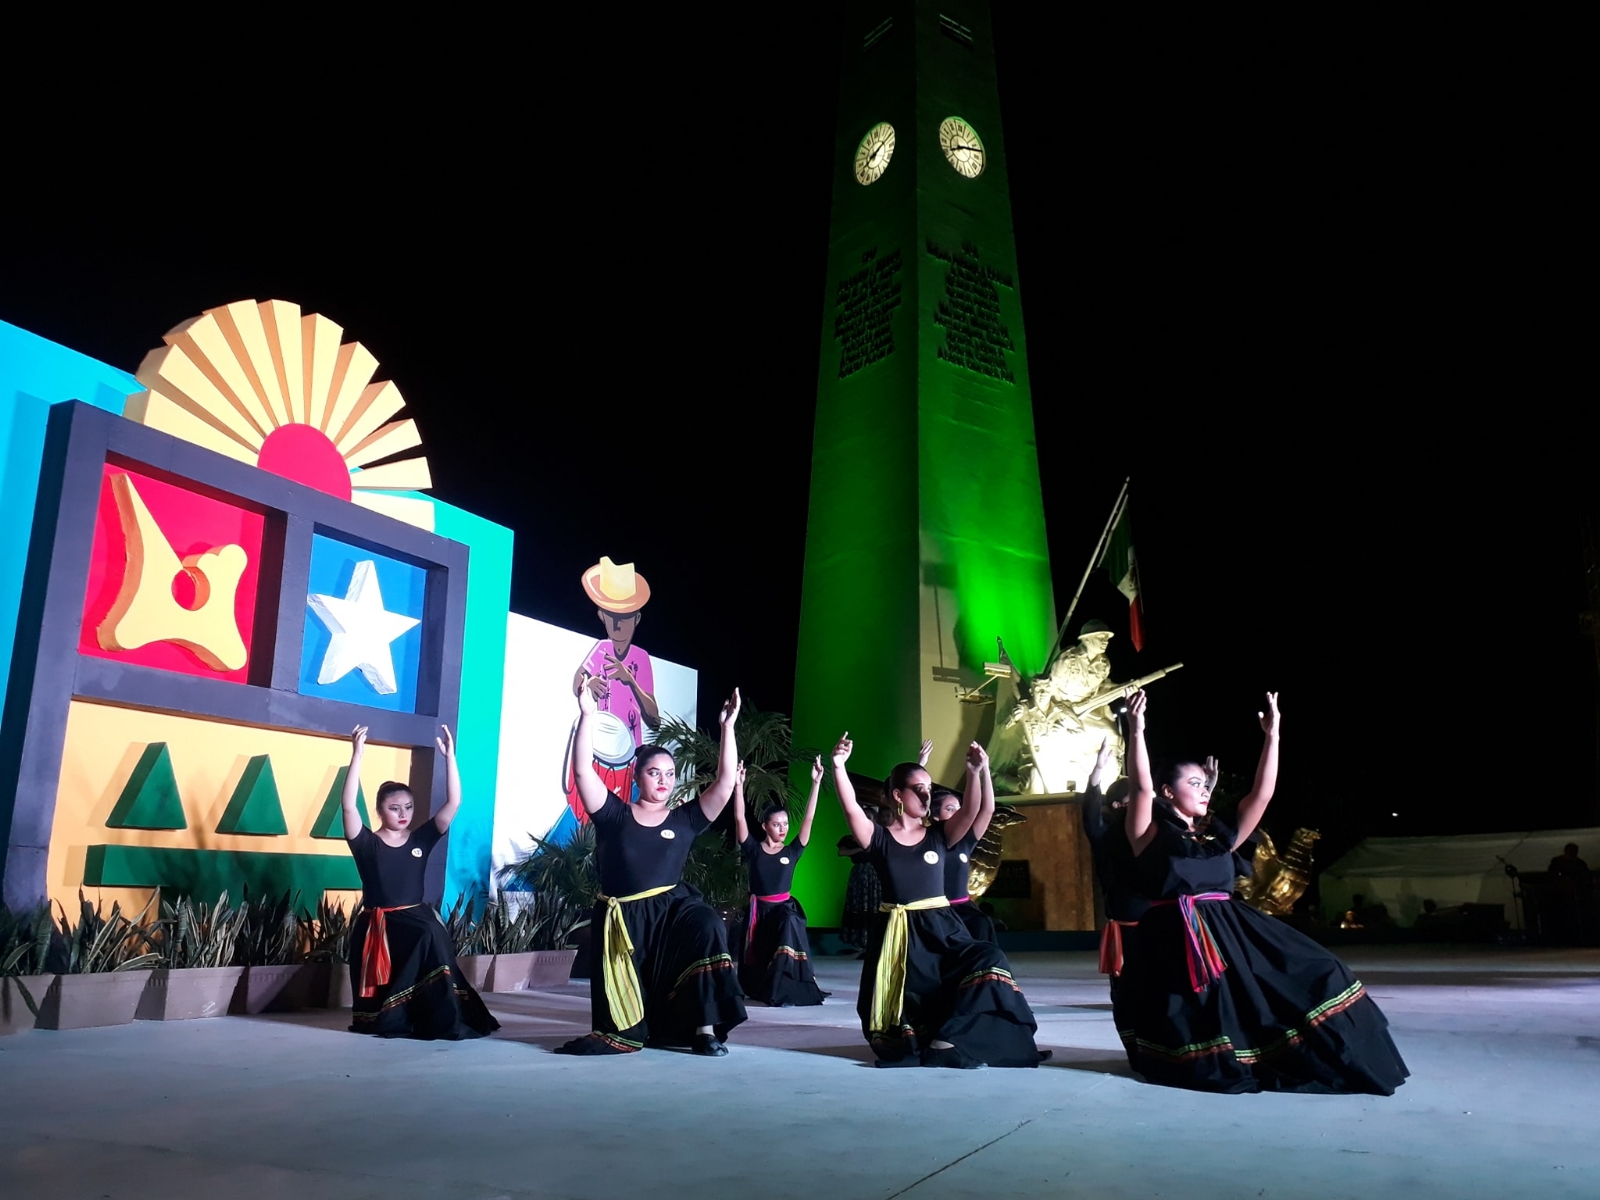 Este año sí abra Festival de cultura del caribe en Quintana Roo